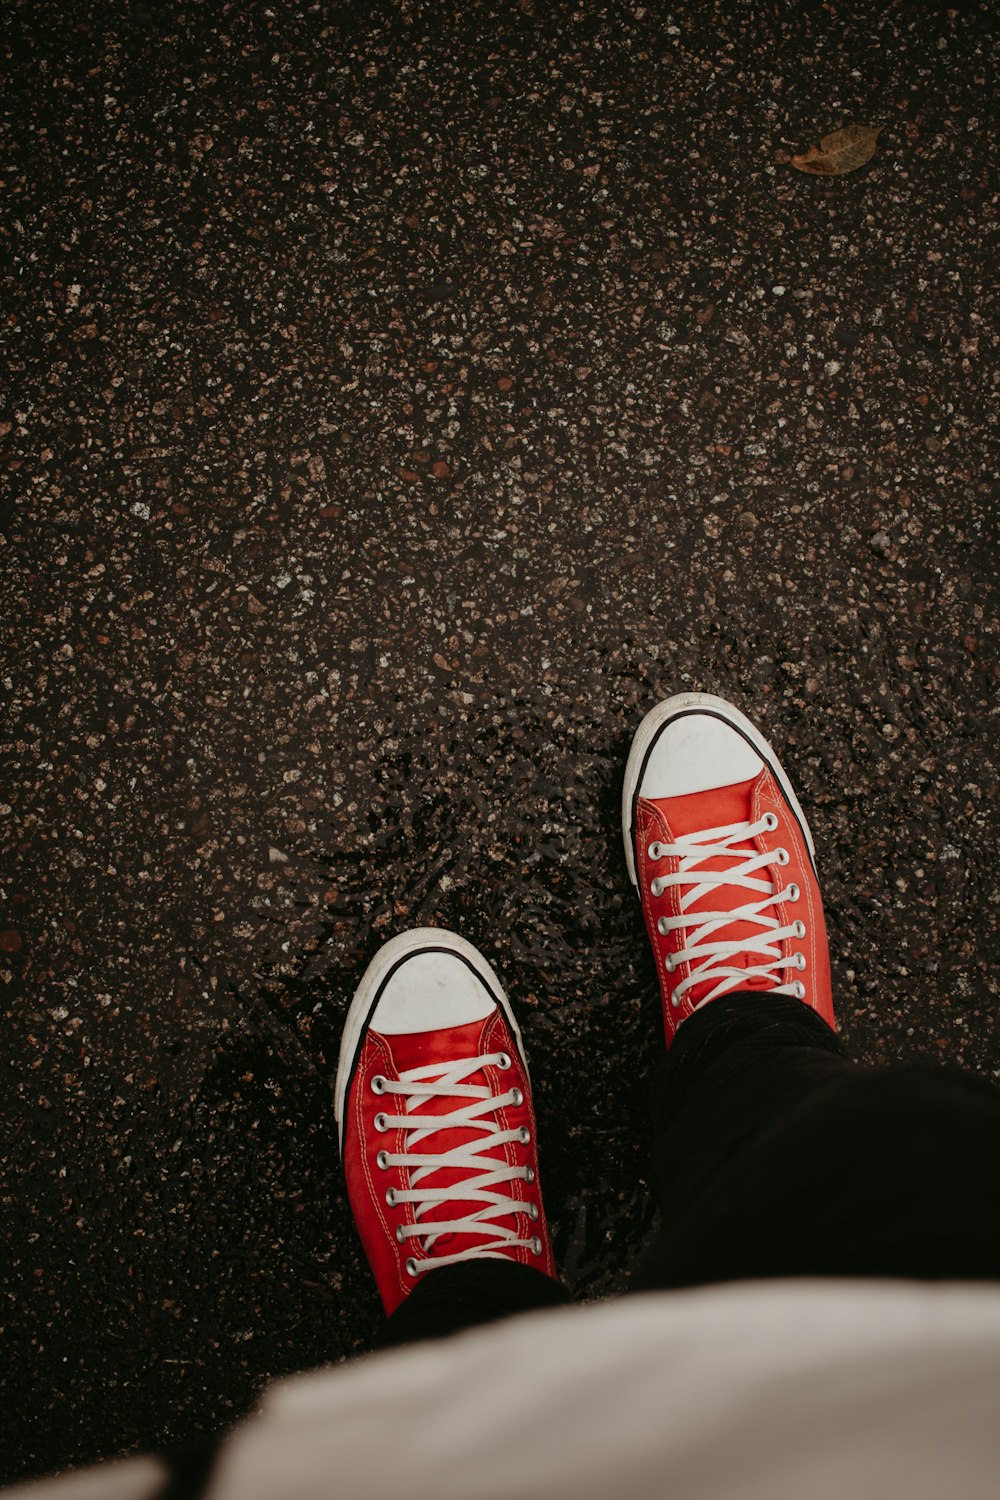 Una persona che indossa scarpe da ginnastica rosse in piedi su un marciapiede